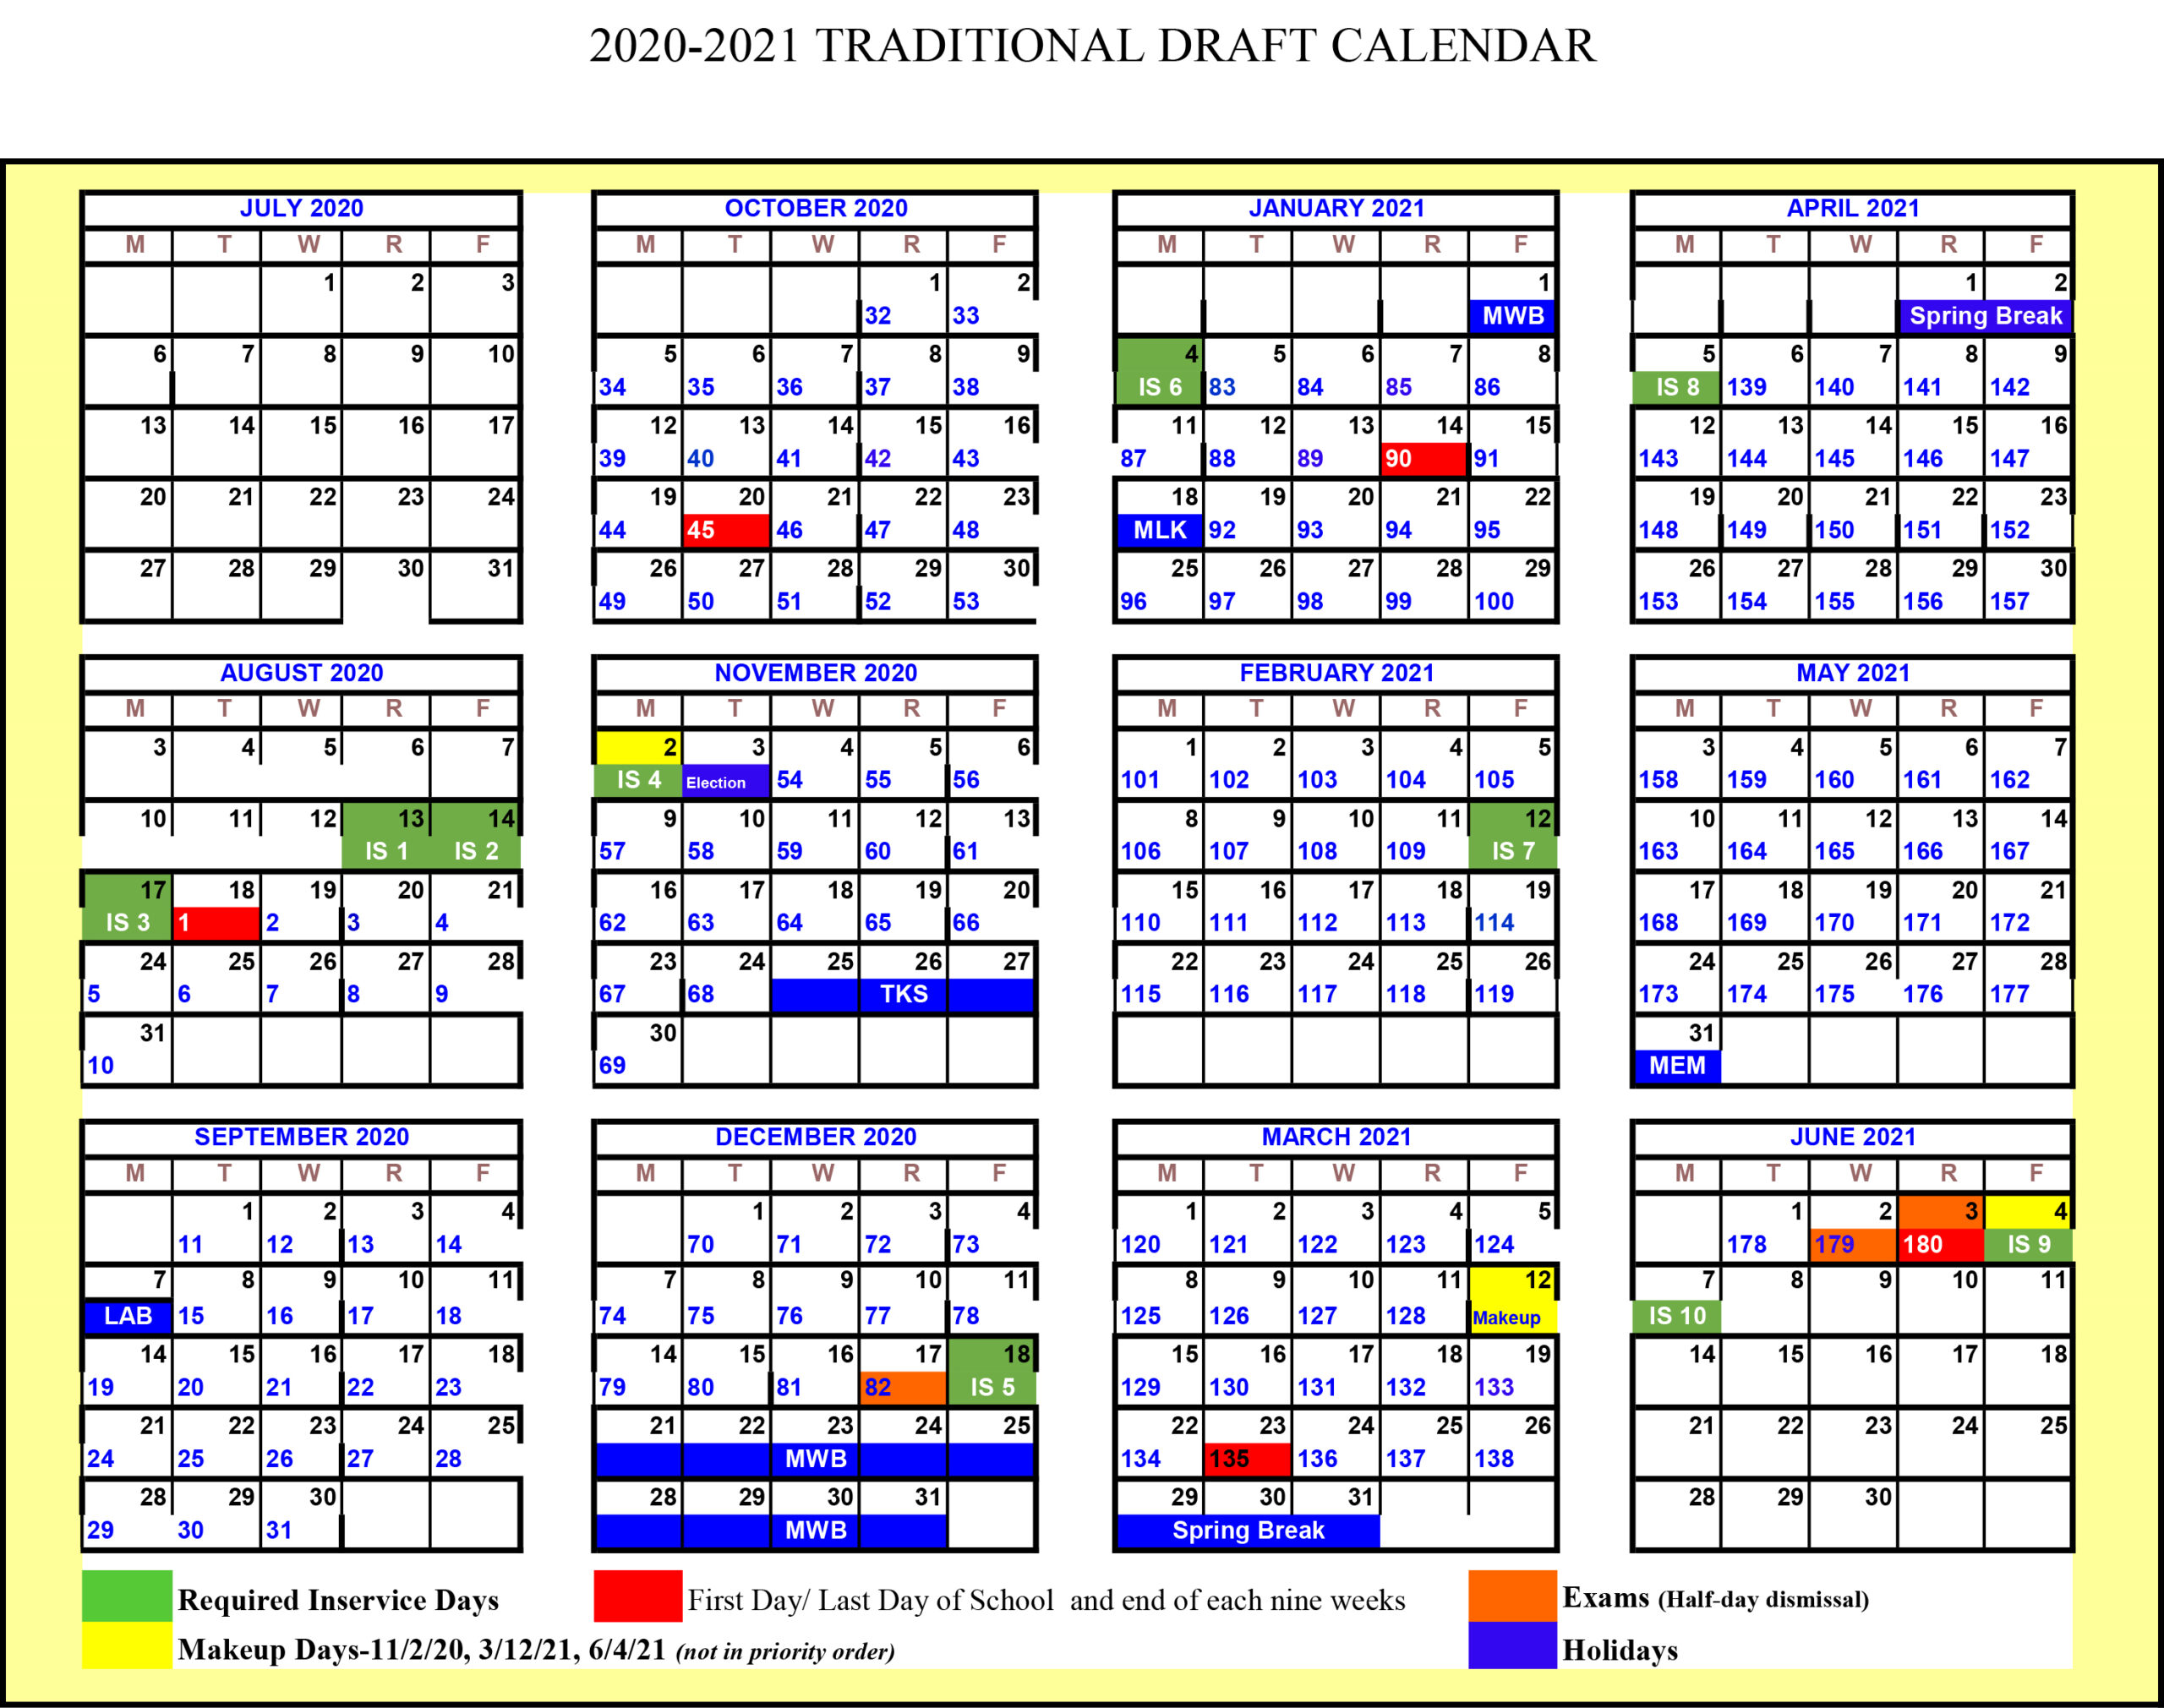 Harford County Public Schools Calendar 202222 2023